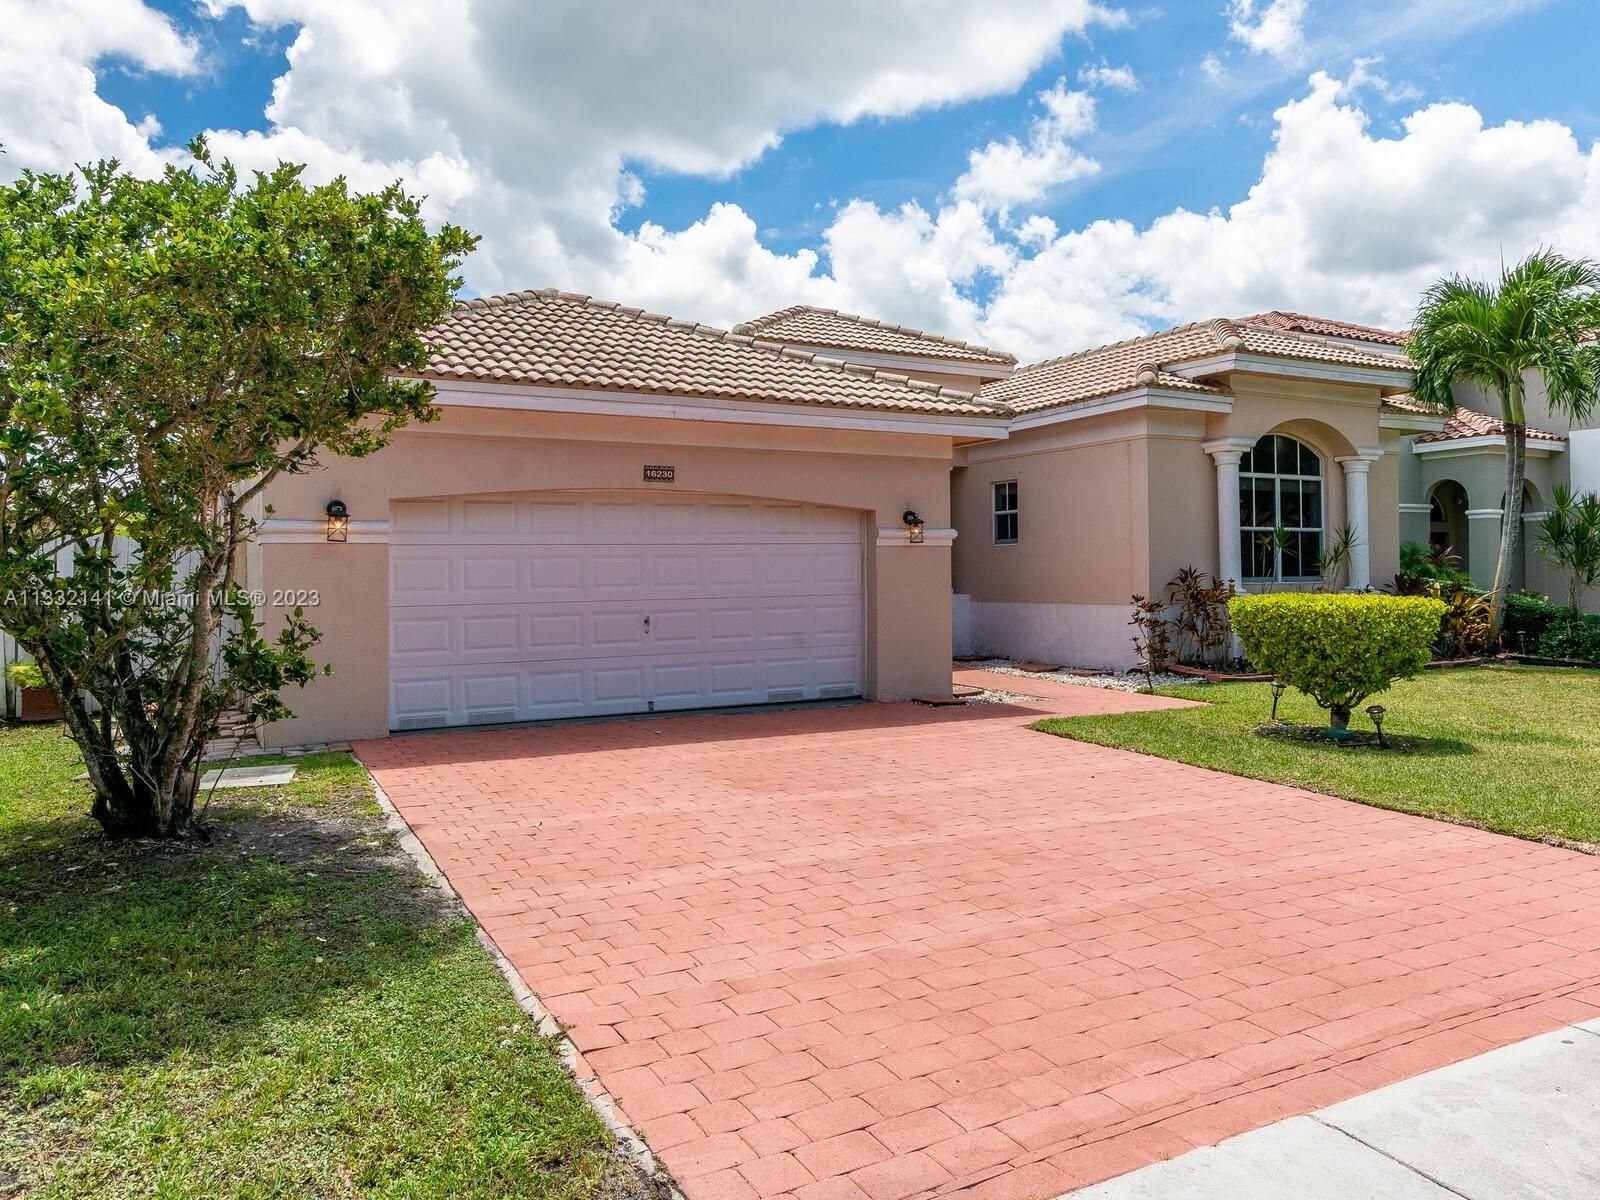 Real estate property located at 16230 36th St, Broward County, Miramar, FL